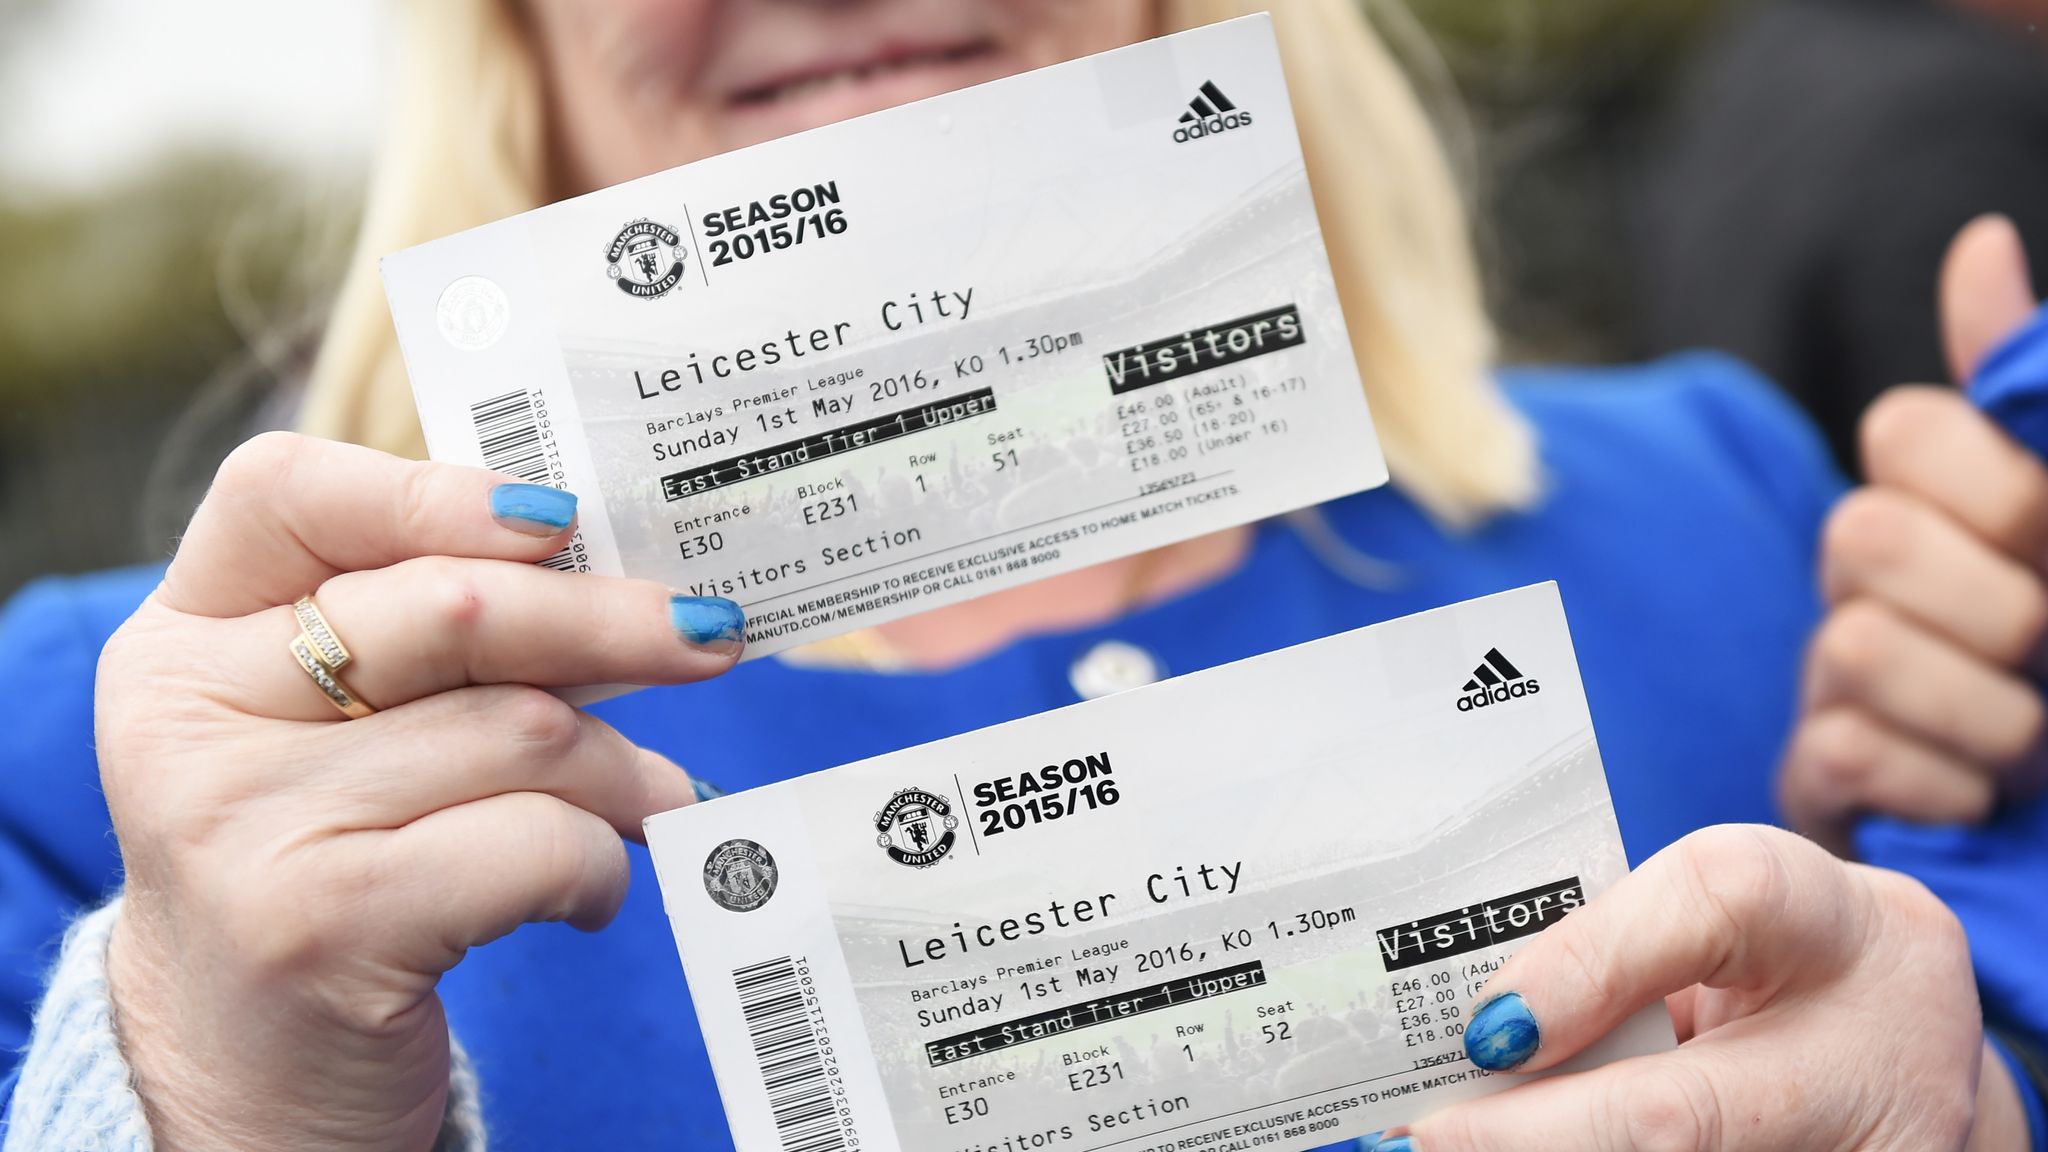 Sky ticket. Football Match ticket. Soccer ticket. Ticket on. Priority tickets.